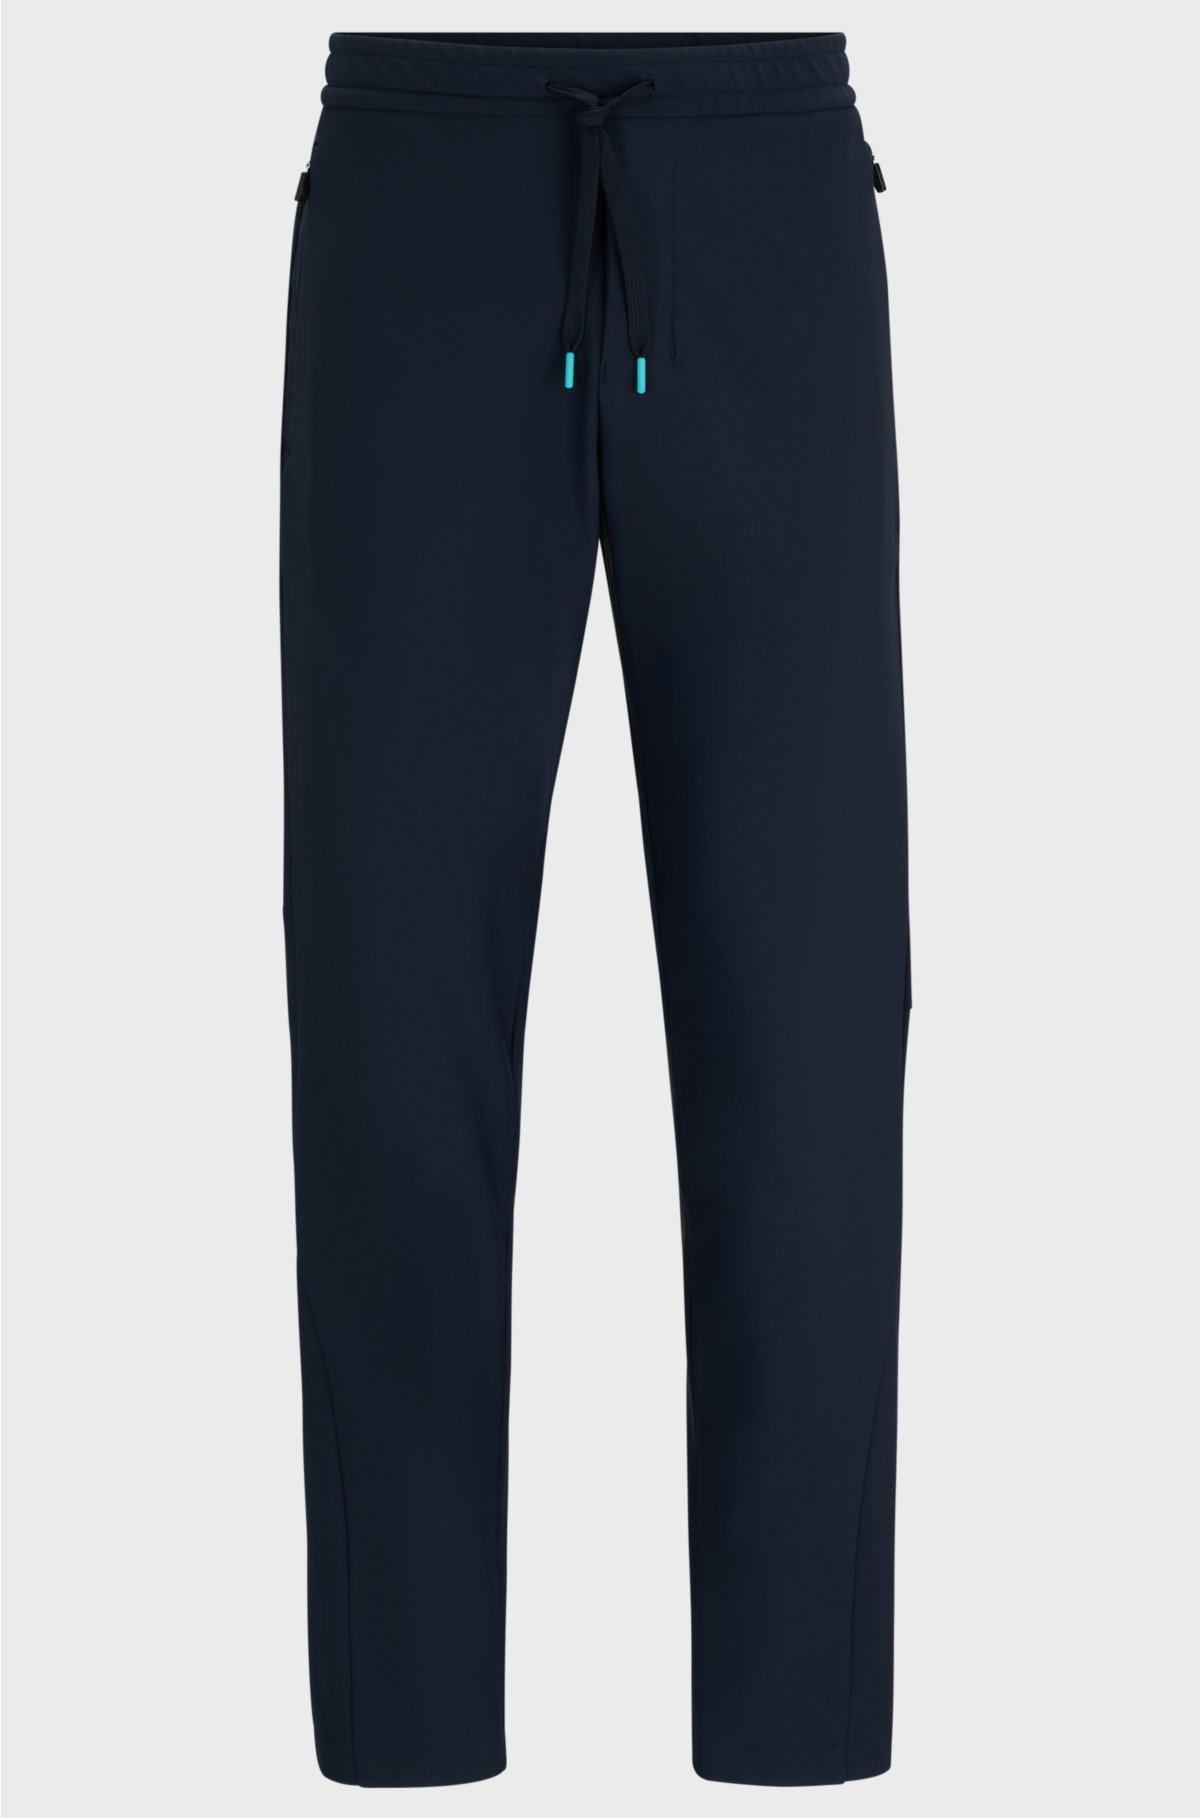 Slim-fit trousers in water-repellent bonded fabric, Dark Blue